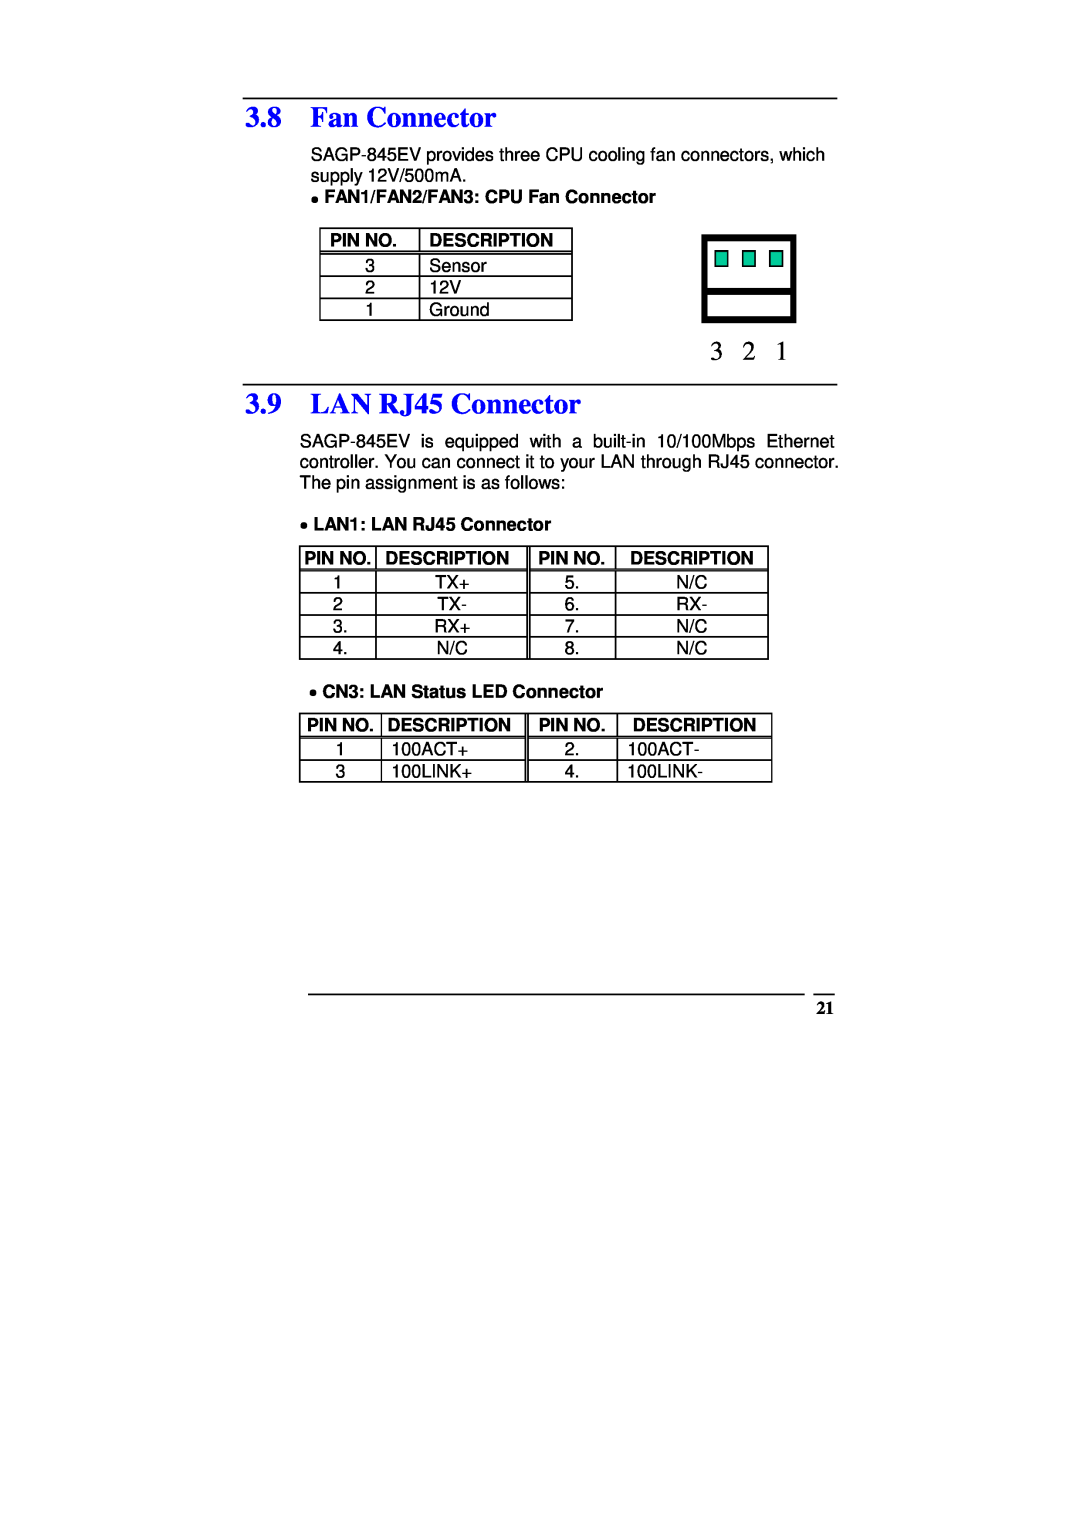 ICP DAS USA SAGP-845EV manual LAN RJ45 Connector, FAN1/FAN2/FAN3 CPU Fan Connector, Pin No, Description 